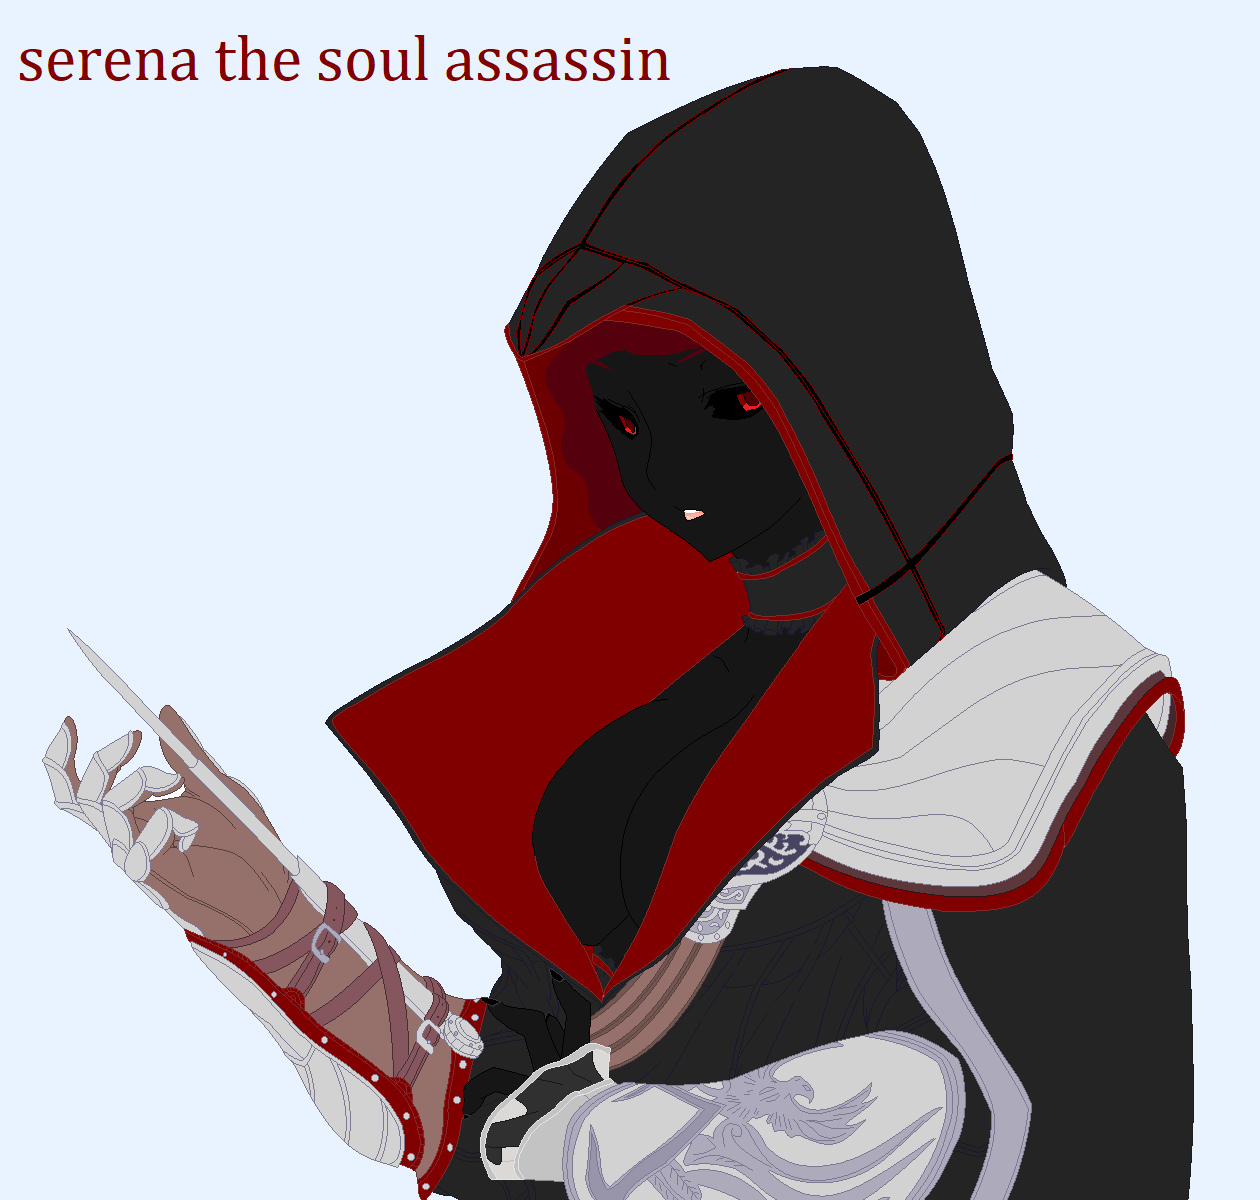 serena the soul assassin by brightfire6391 -- Fur Affinity [dot] net